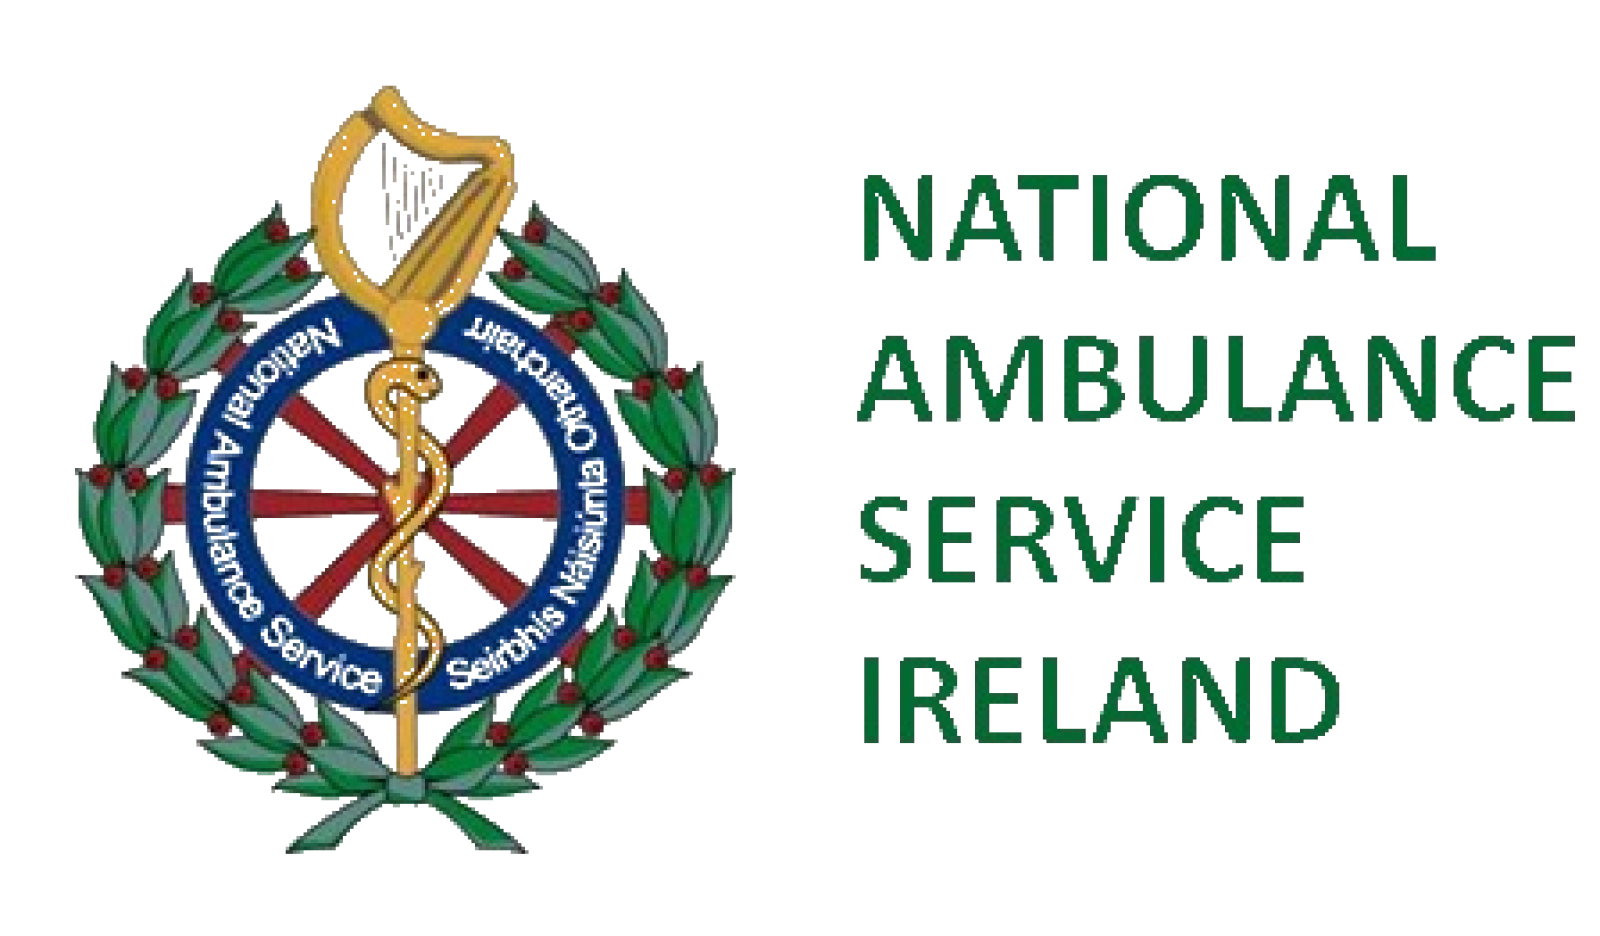 National Ambulance Service Ireland